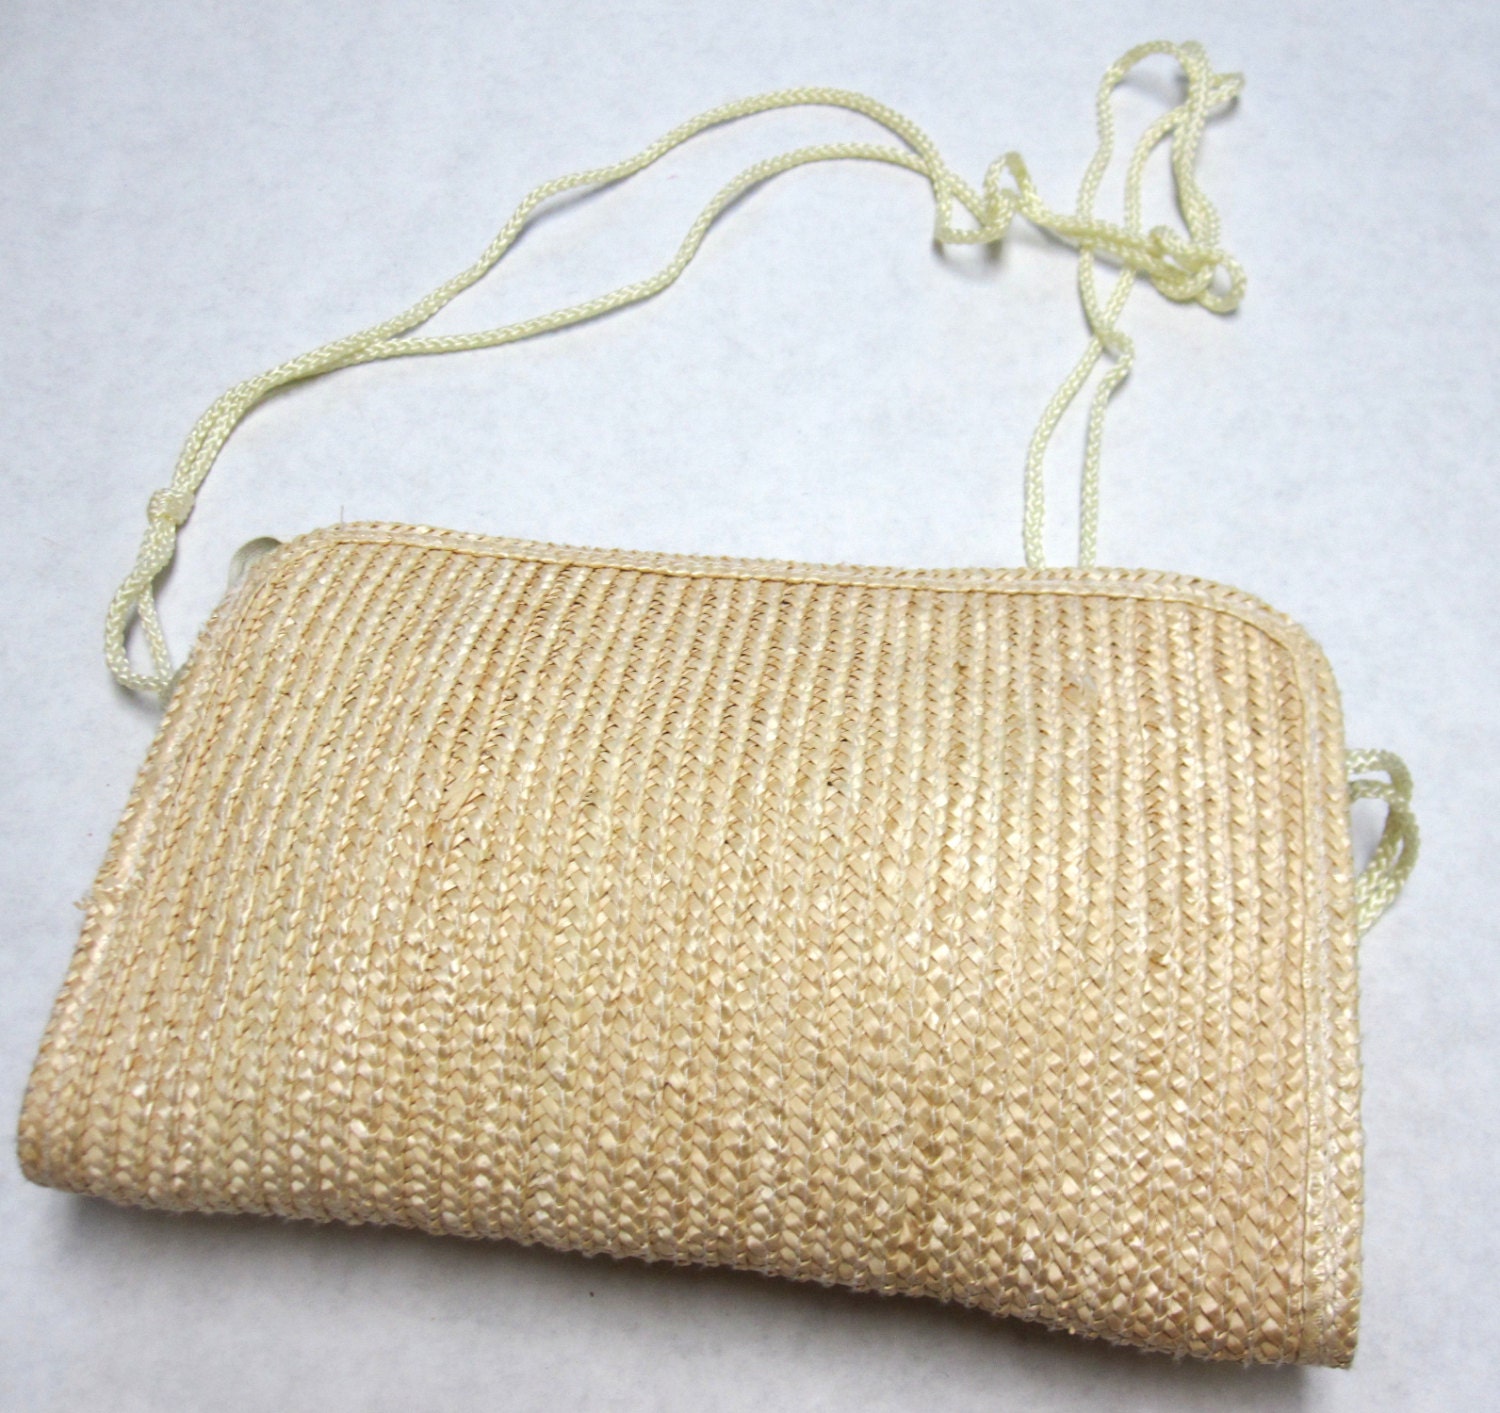 Straw Purse Woven Handbag Natural Fiber By Sweetie2sweetie